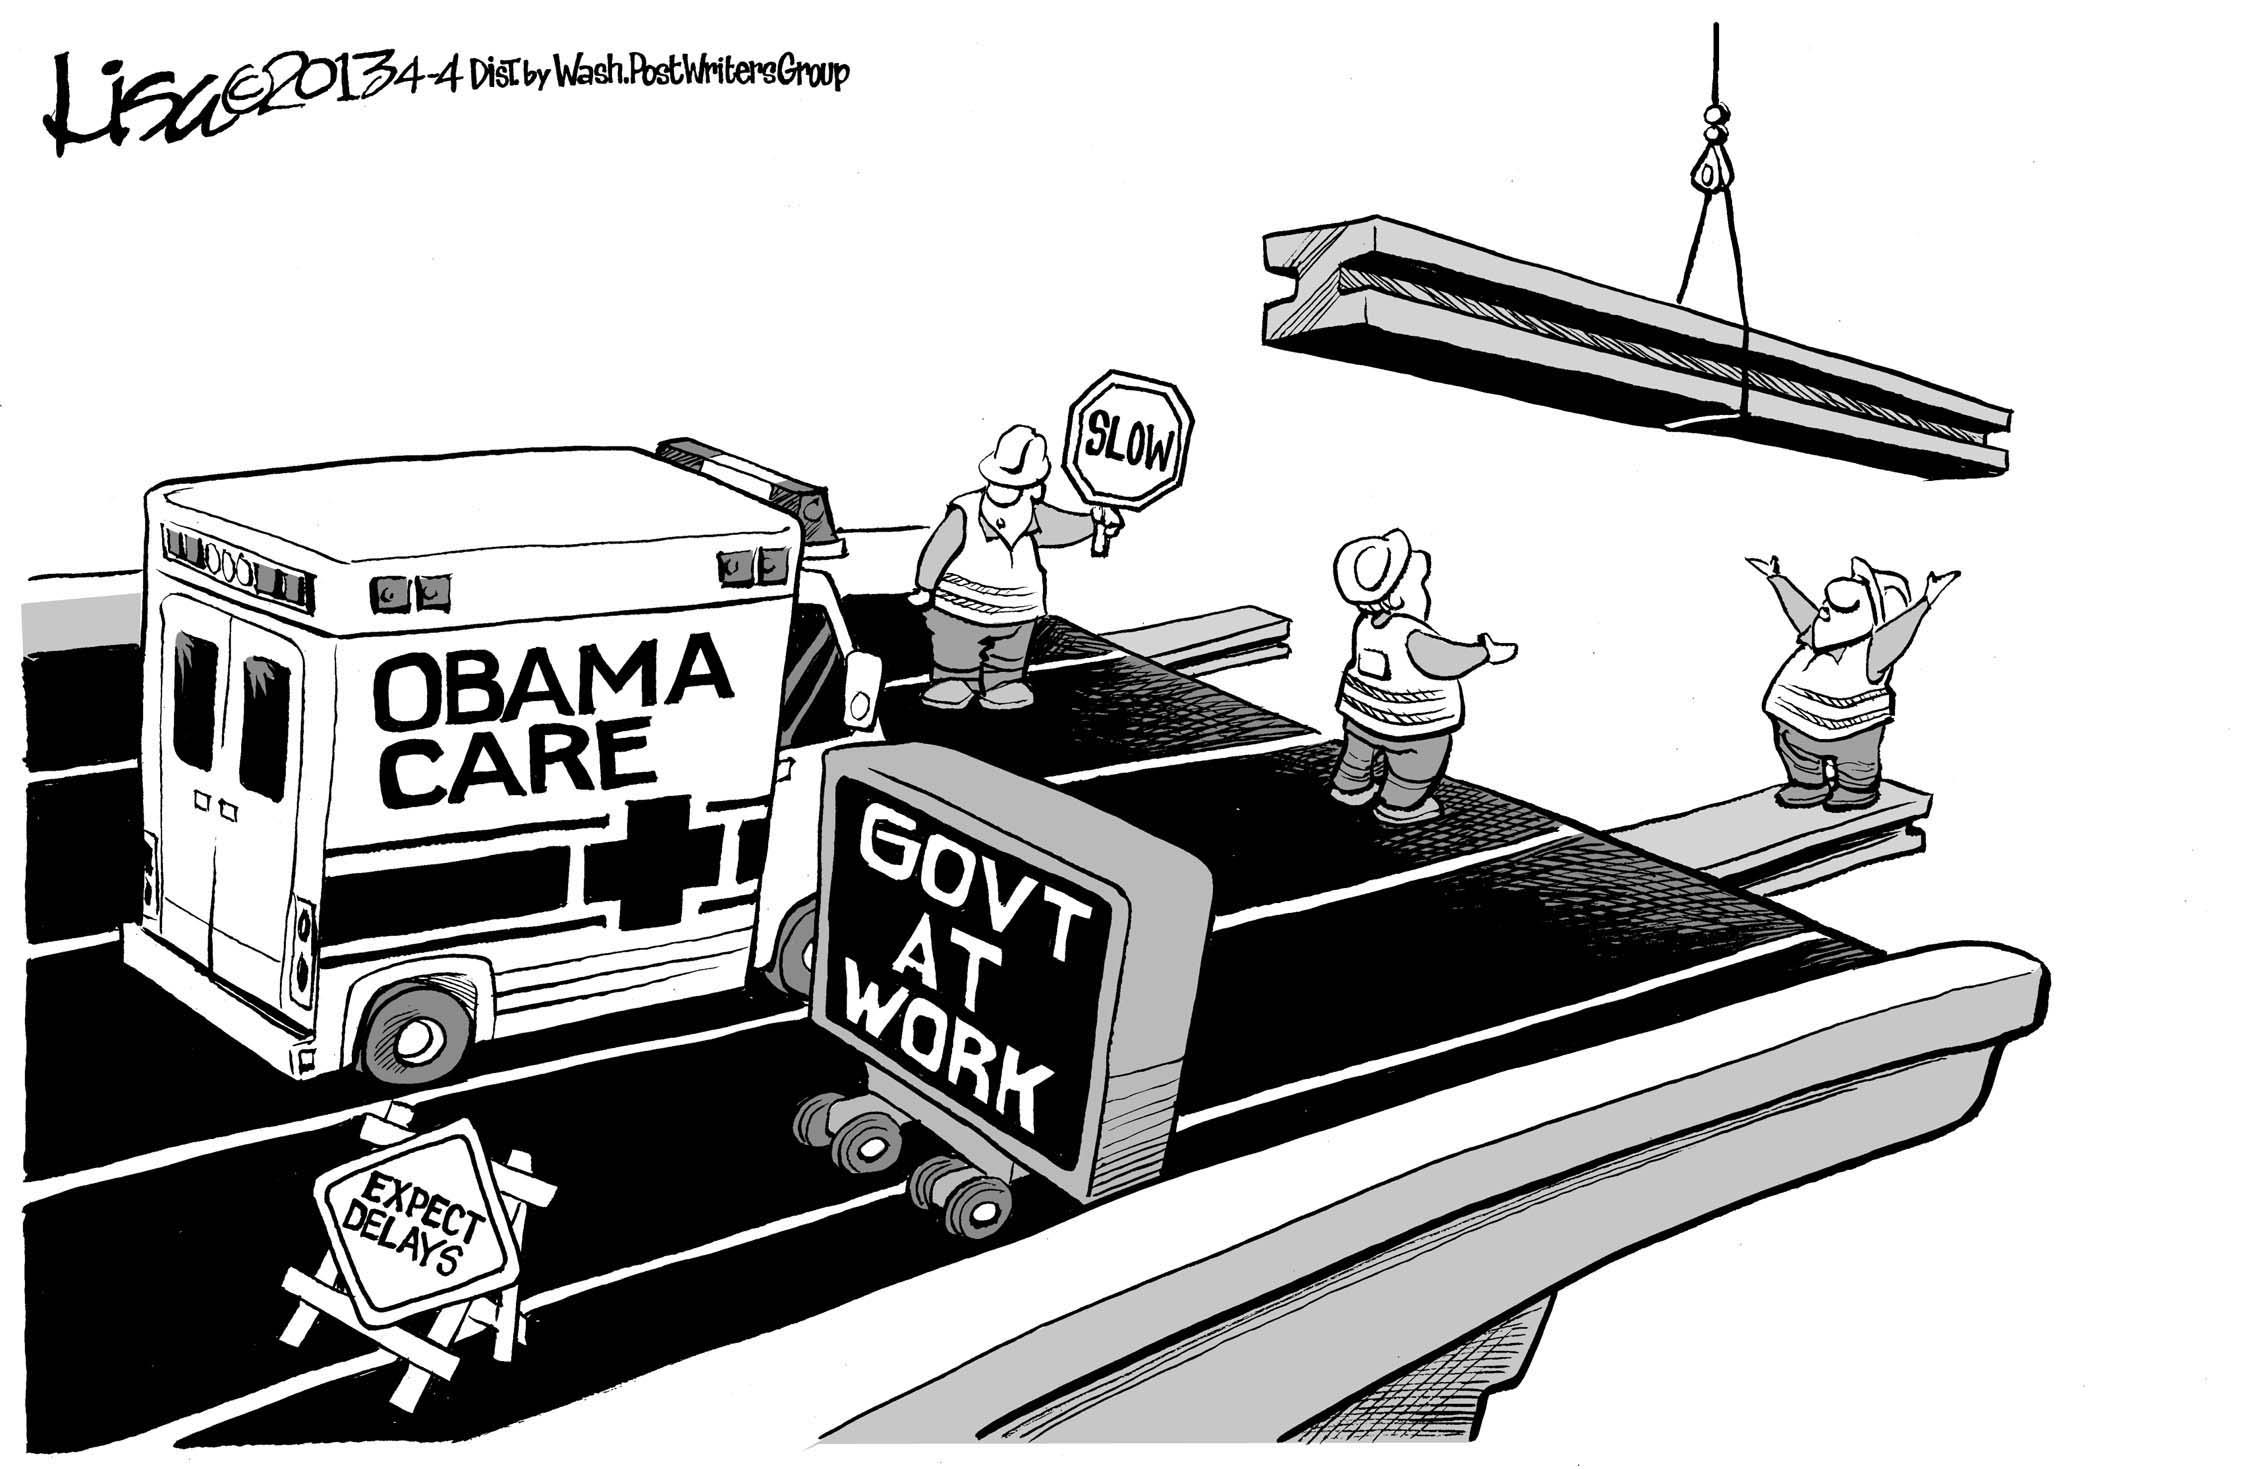 Obamacare proceeds